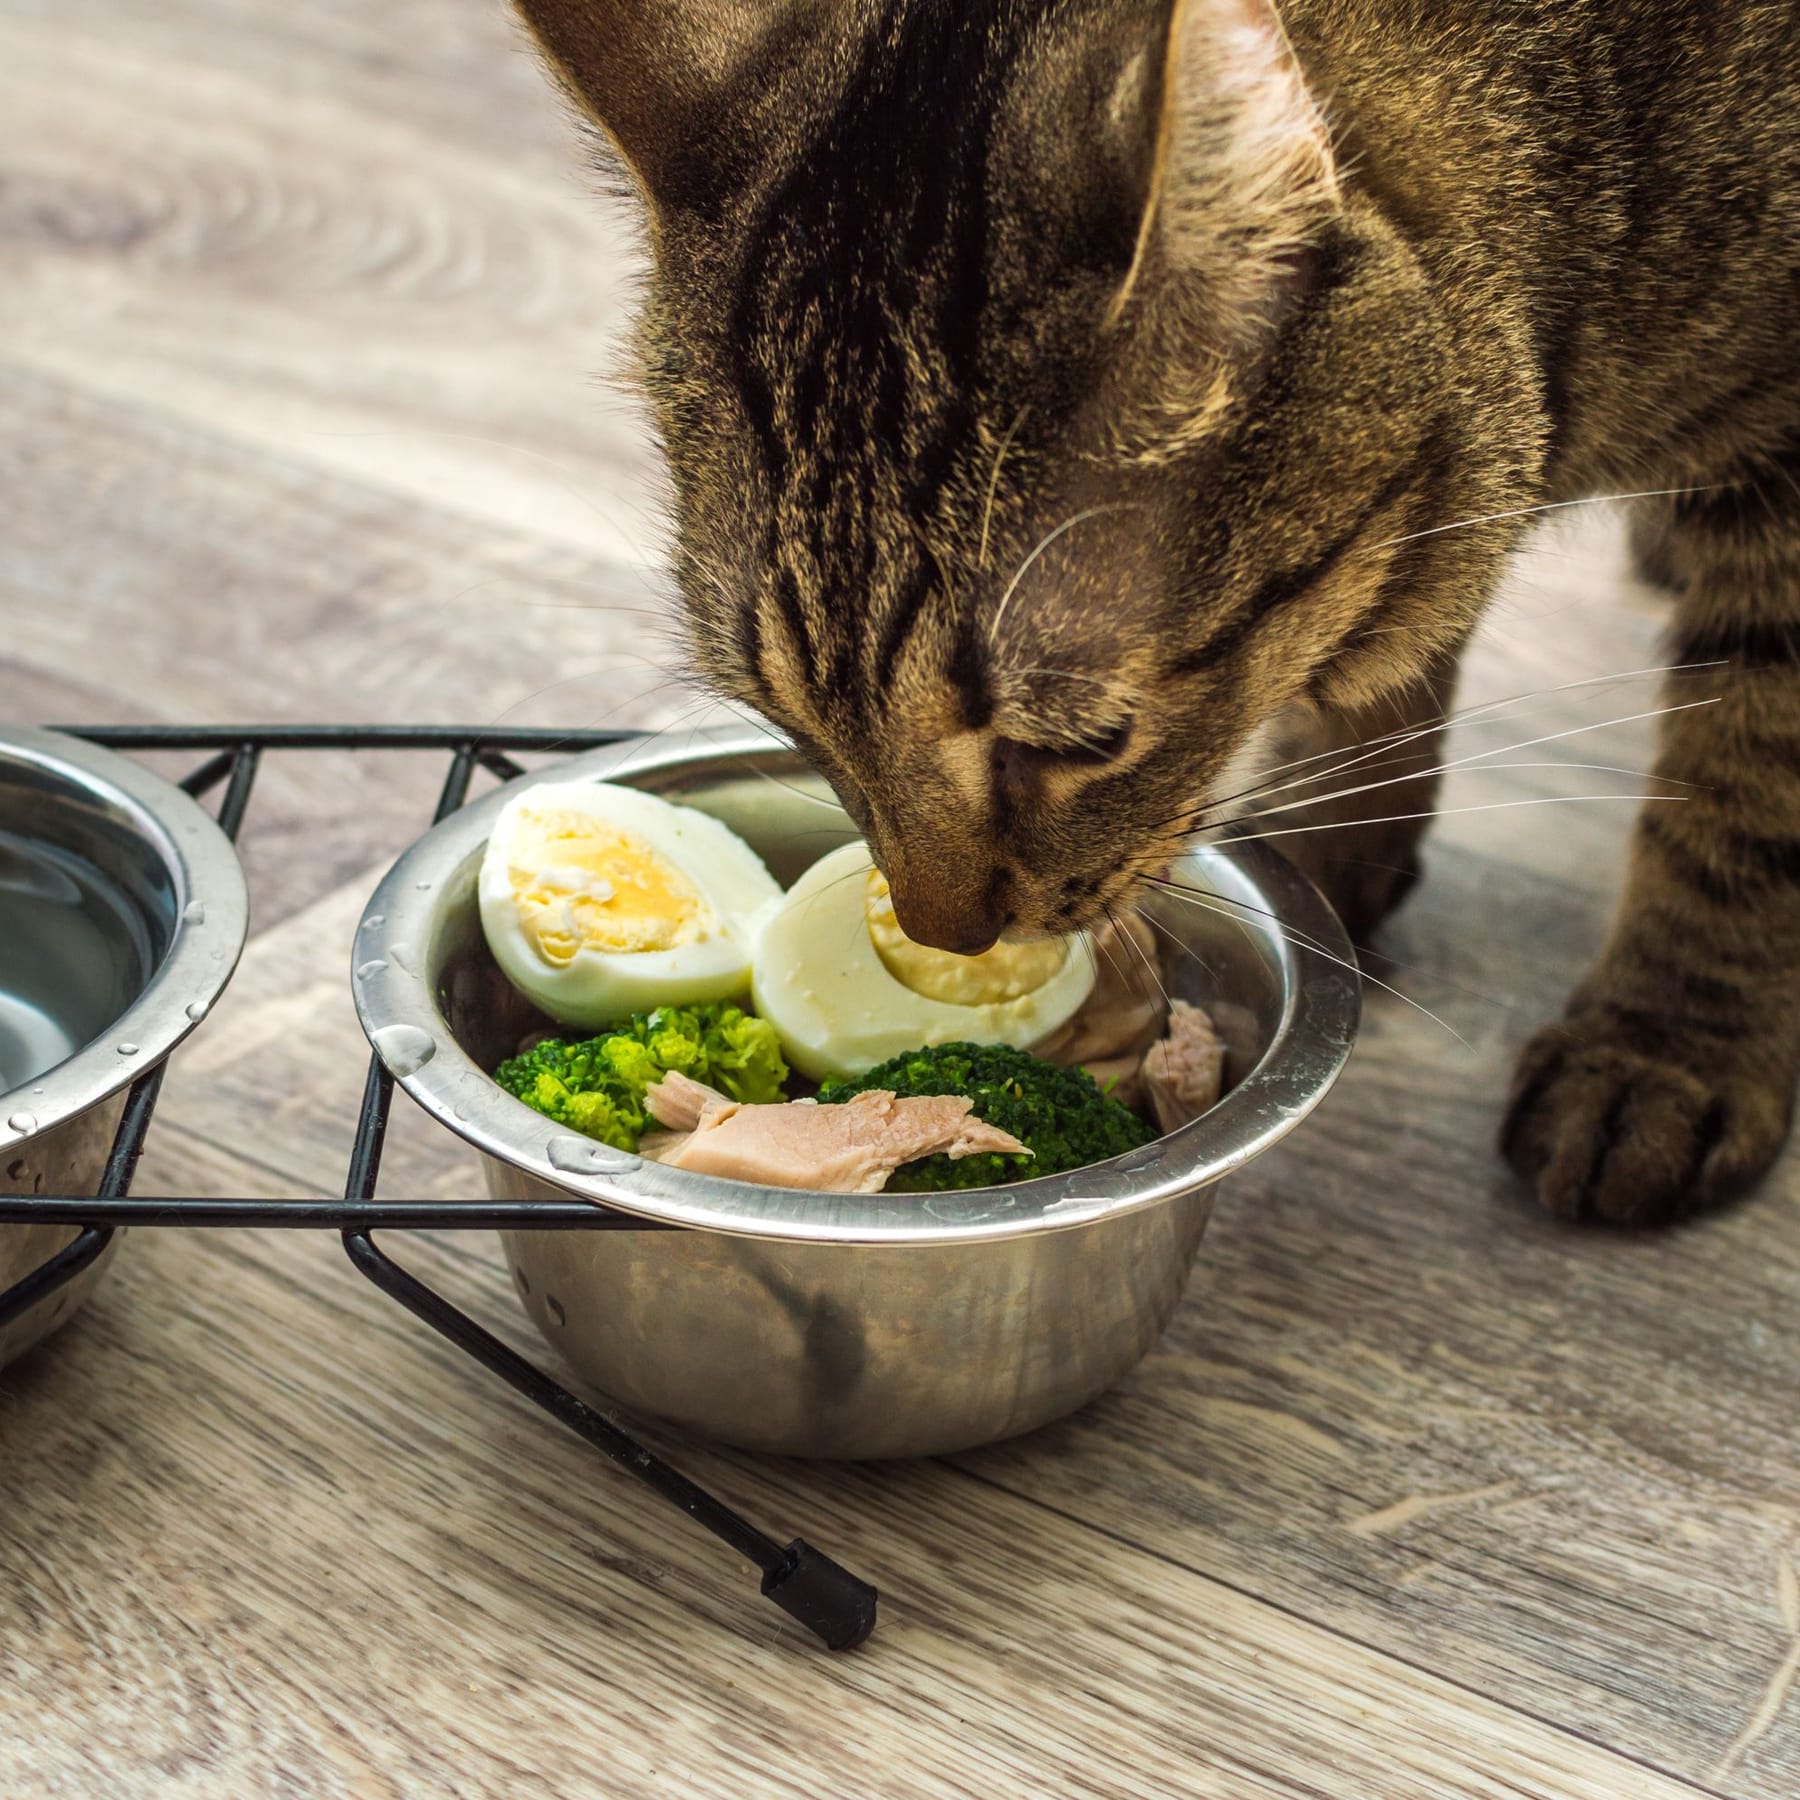 Кошке можно давать яйцо. Кошка кушает. Кошка ест яичницу. Кот ест яйца вареные. Кошка яичница.